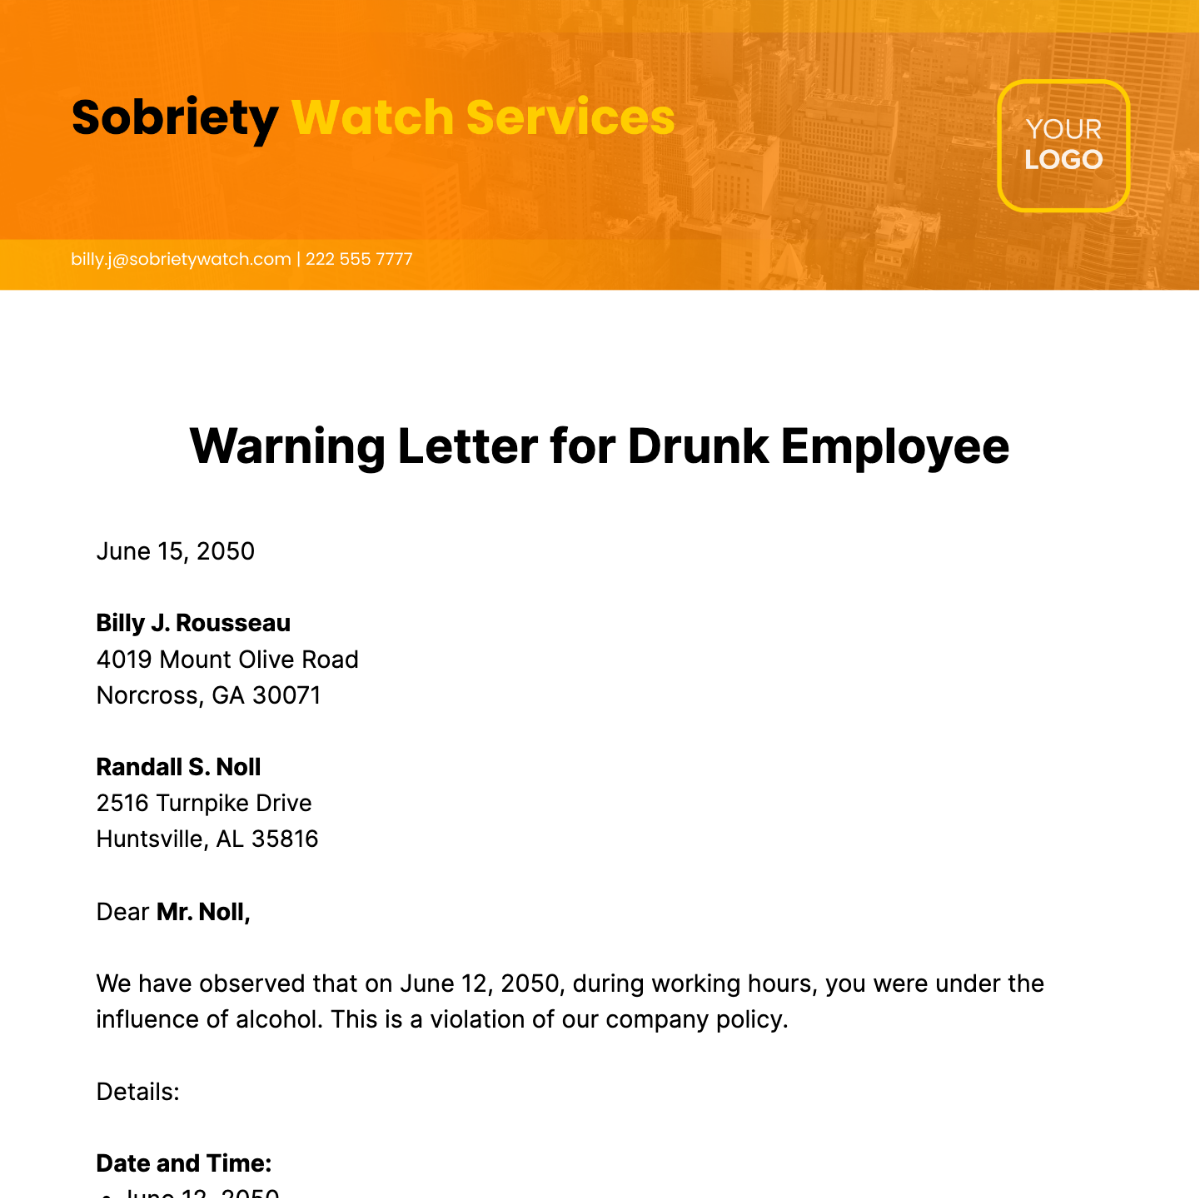 Warning Letter for Drunk Employee Template